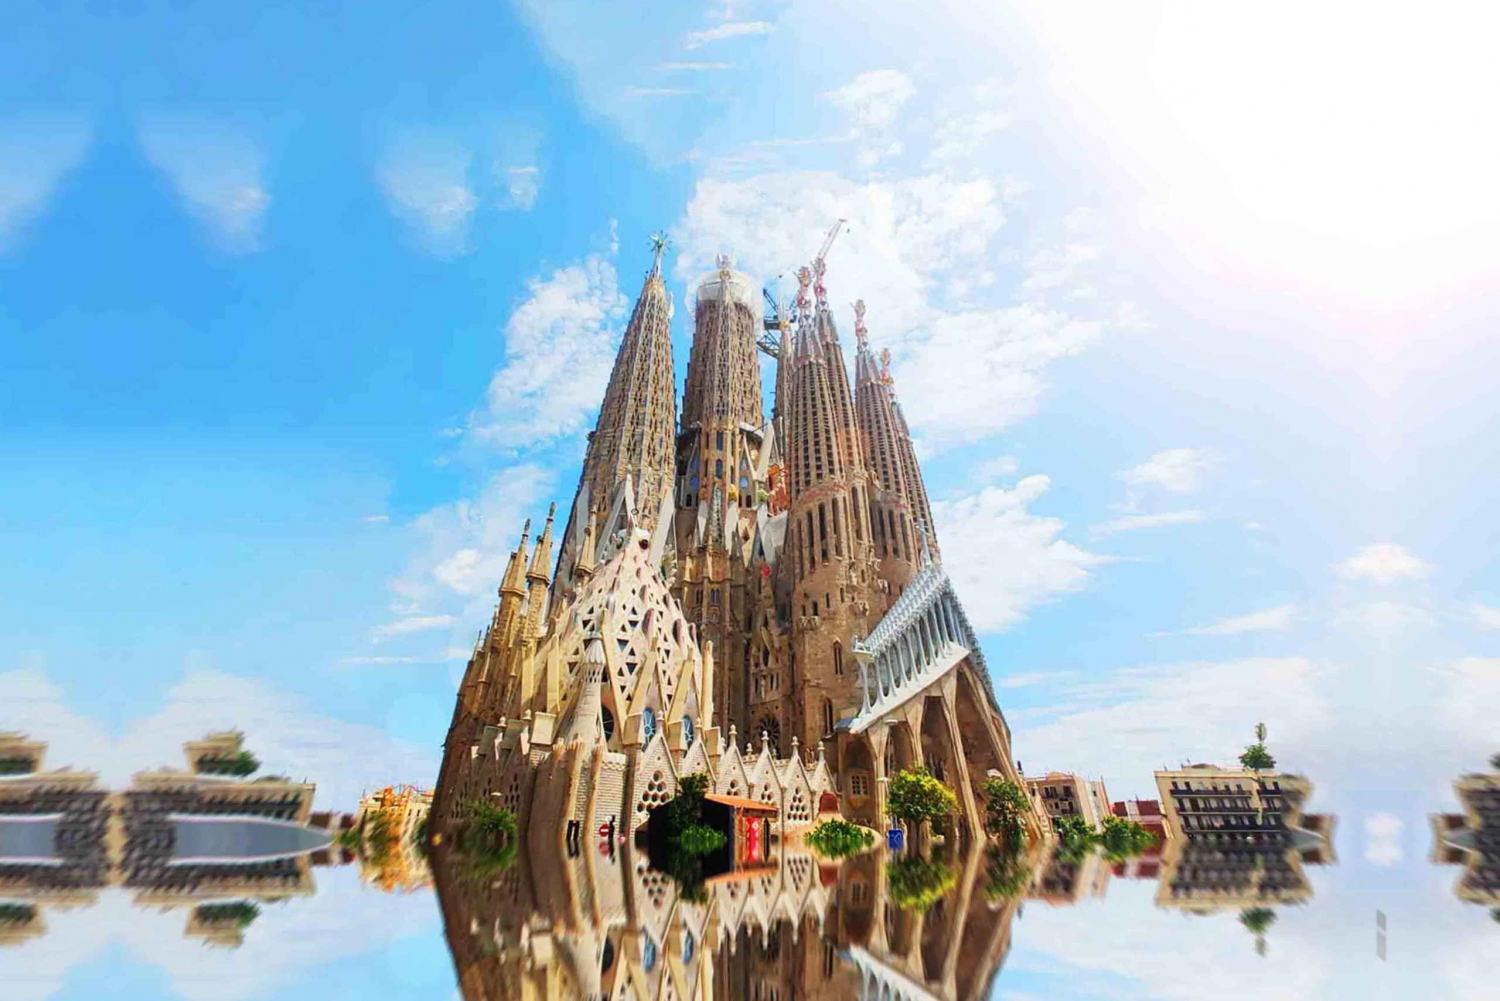 Billetter og guide: Lys og skygger i Sagrada Familia